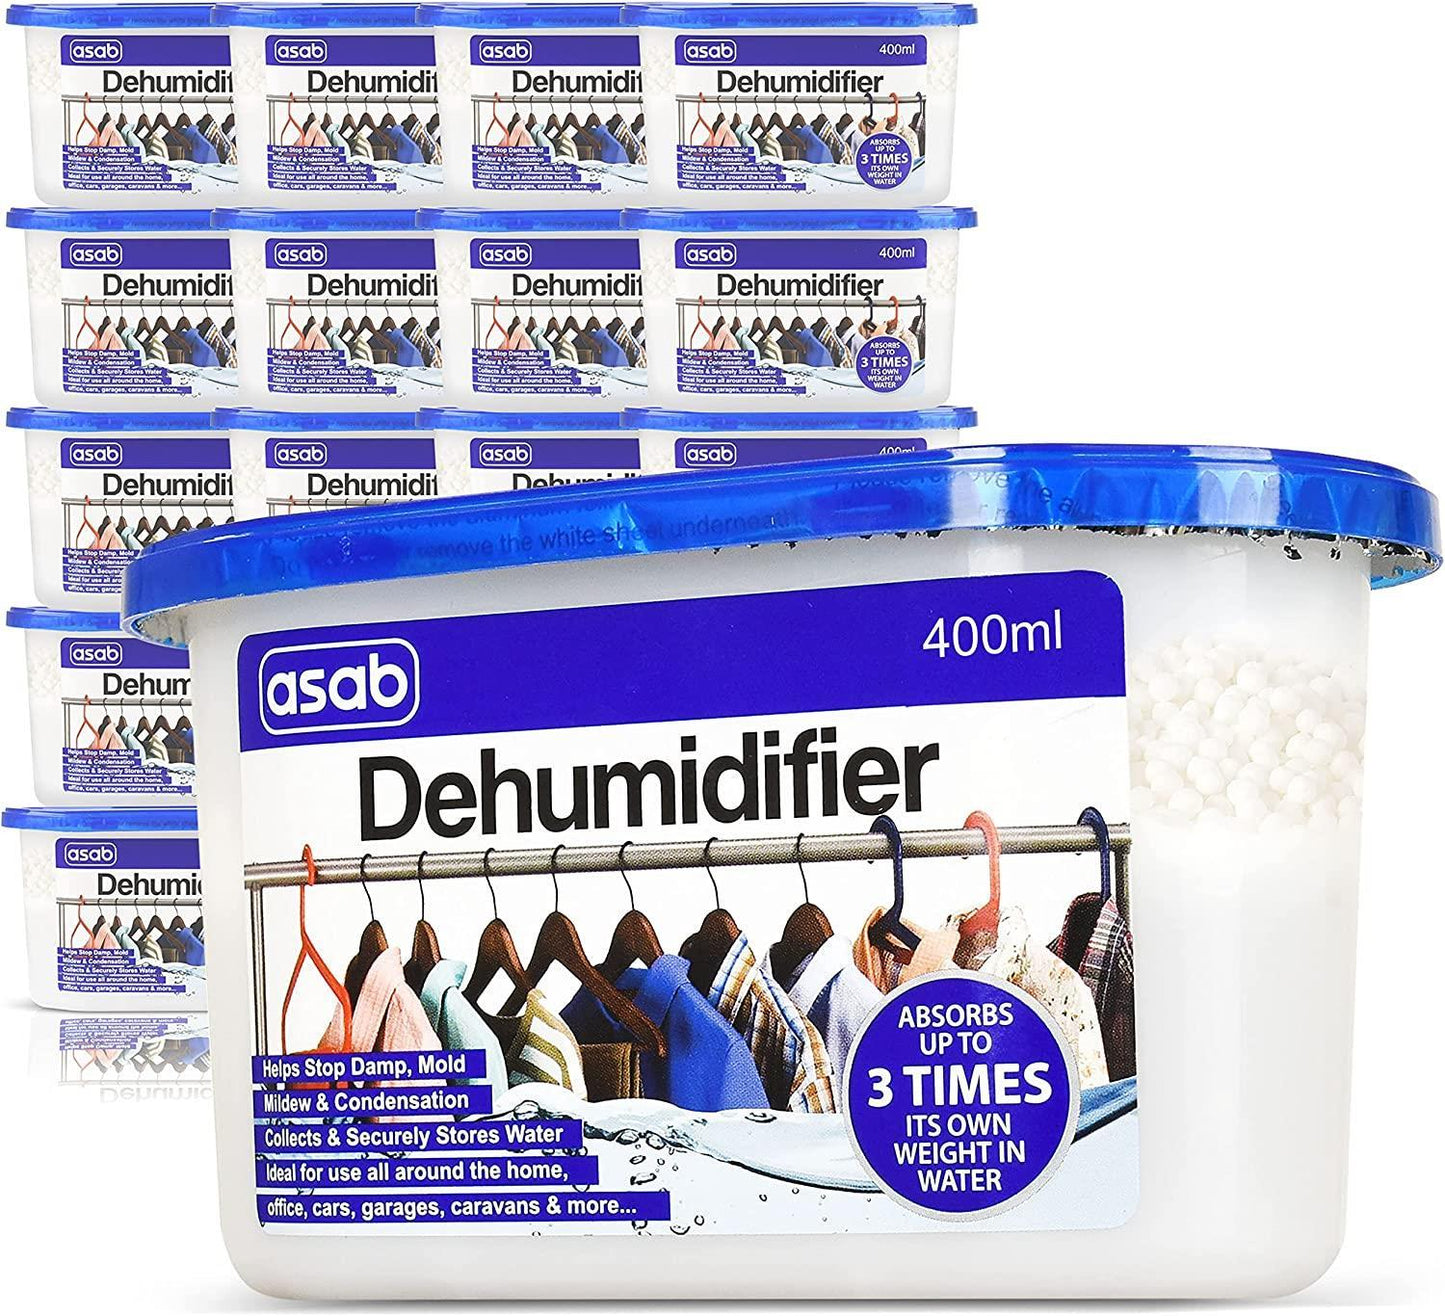 Powerful Dehumidifier for a Healthy Home